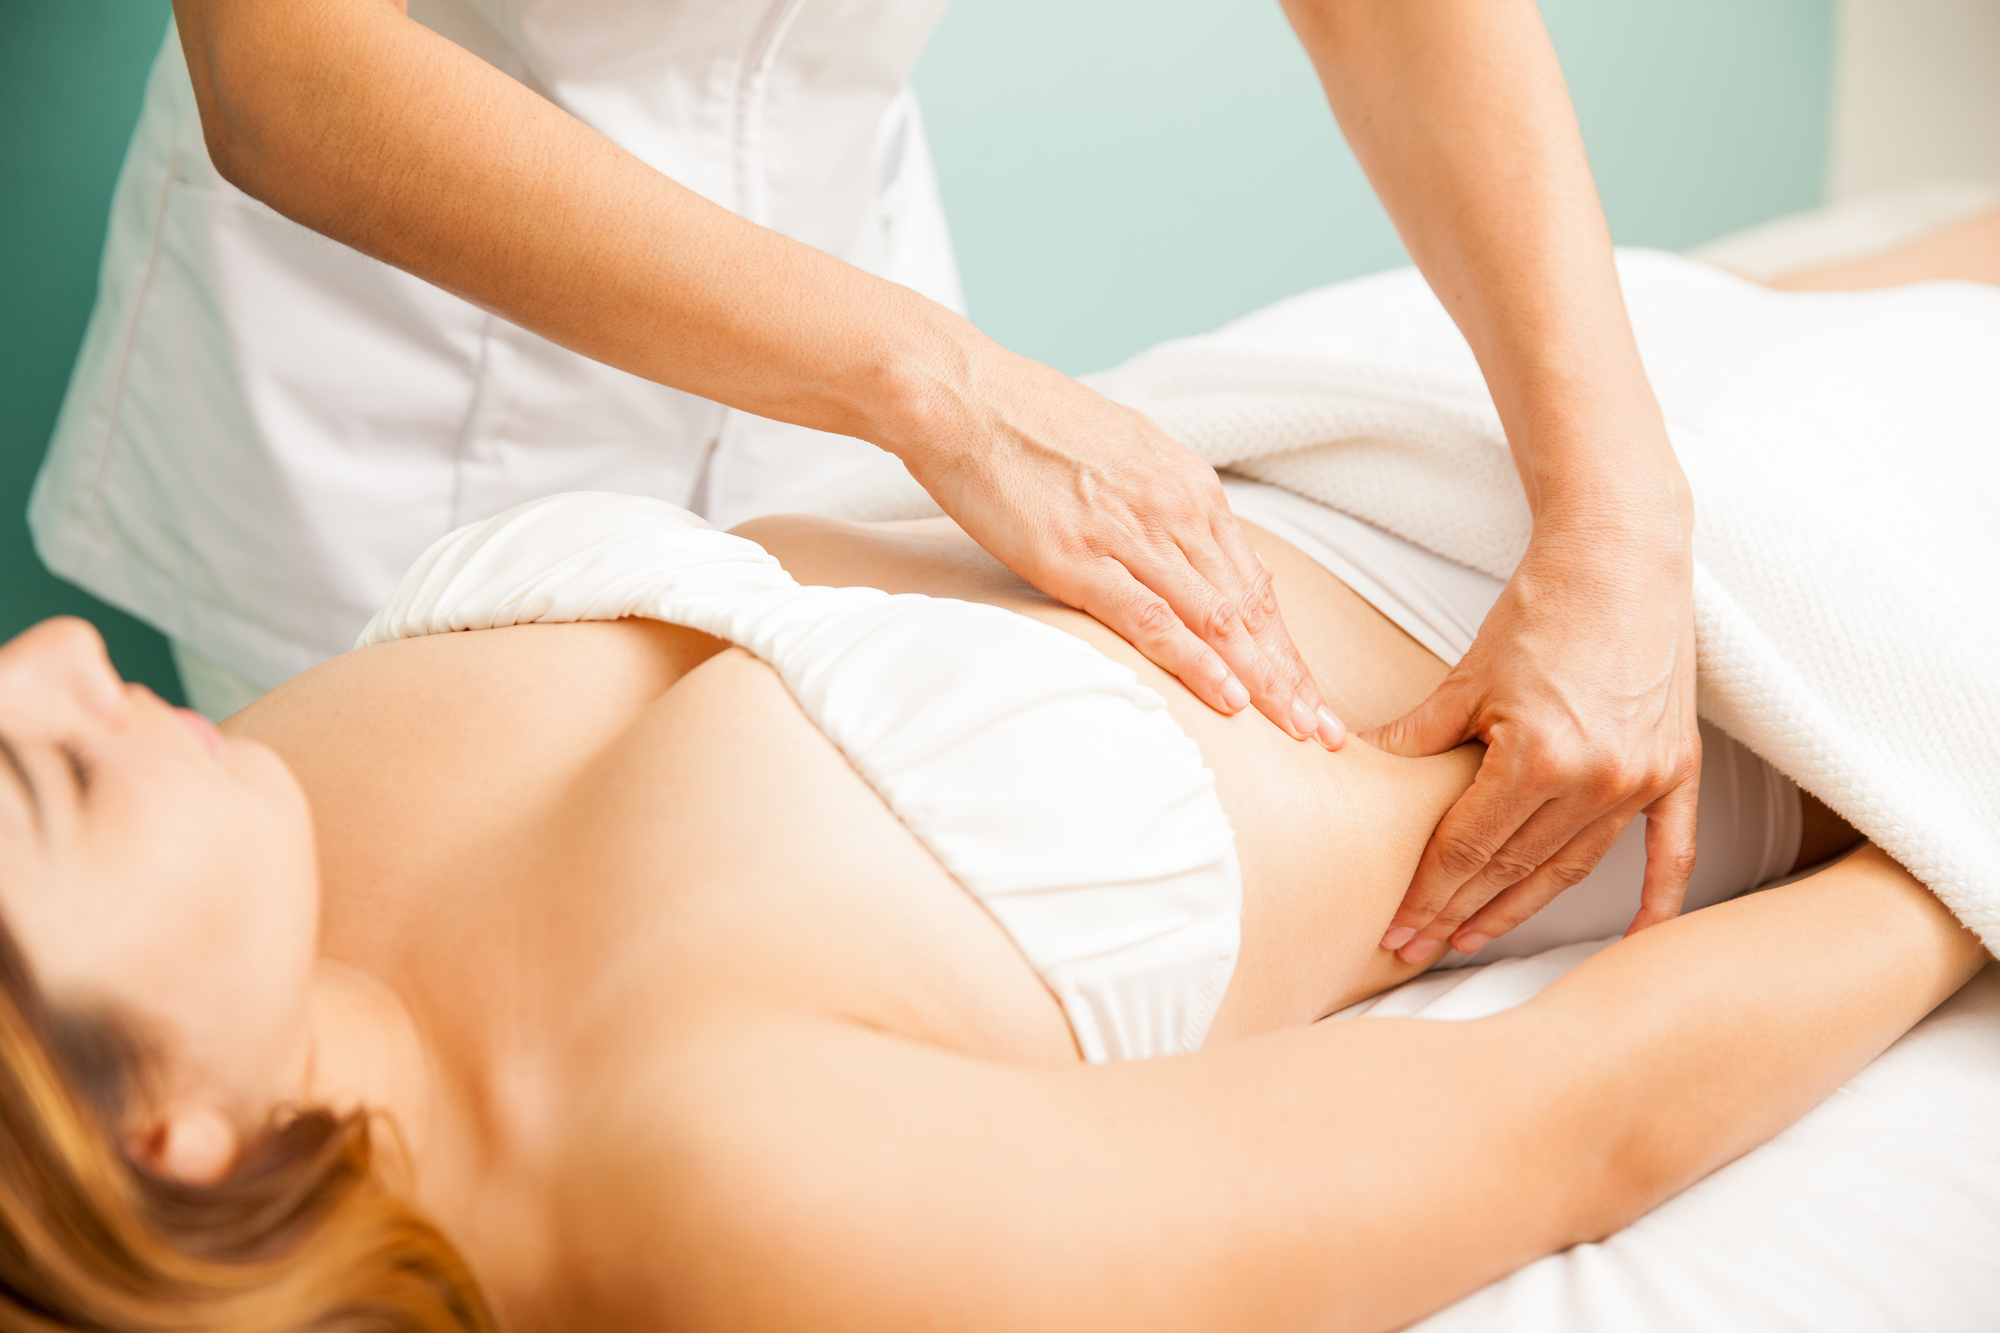 lymphatic massage benefits weight loss